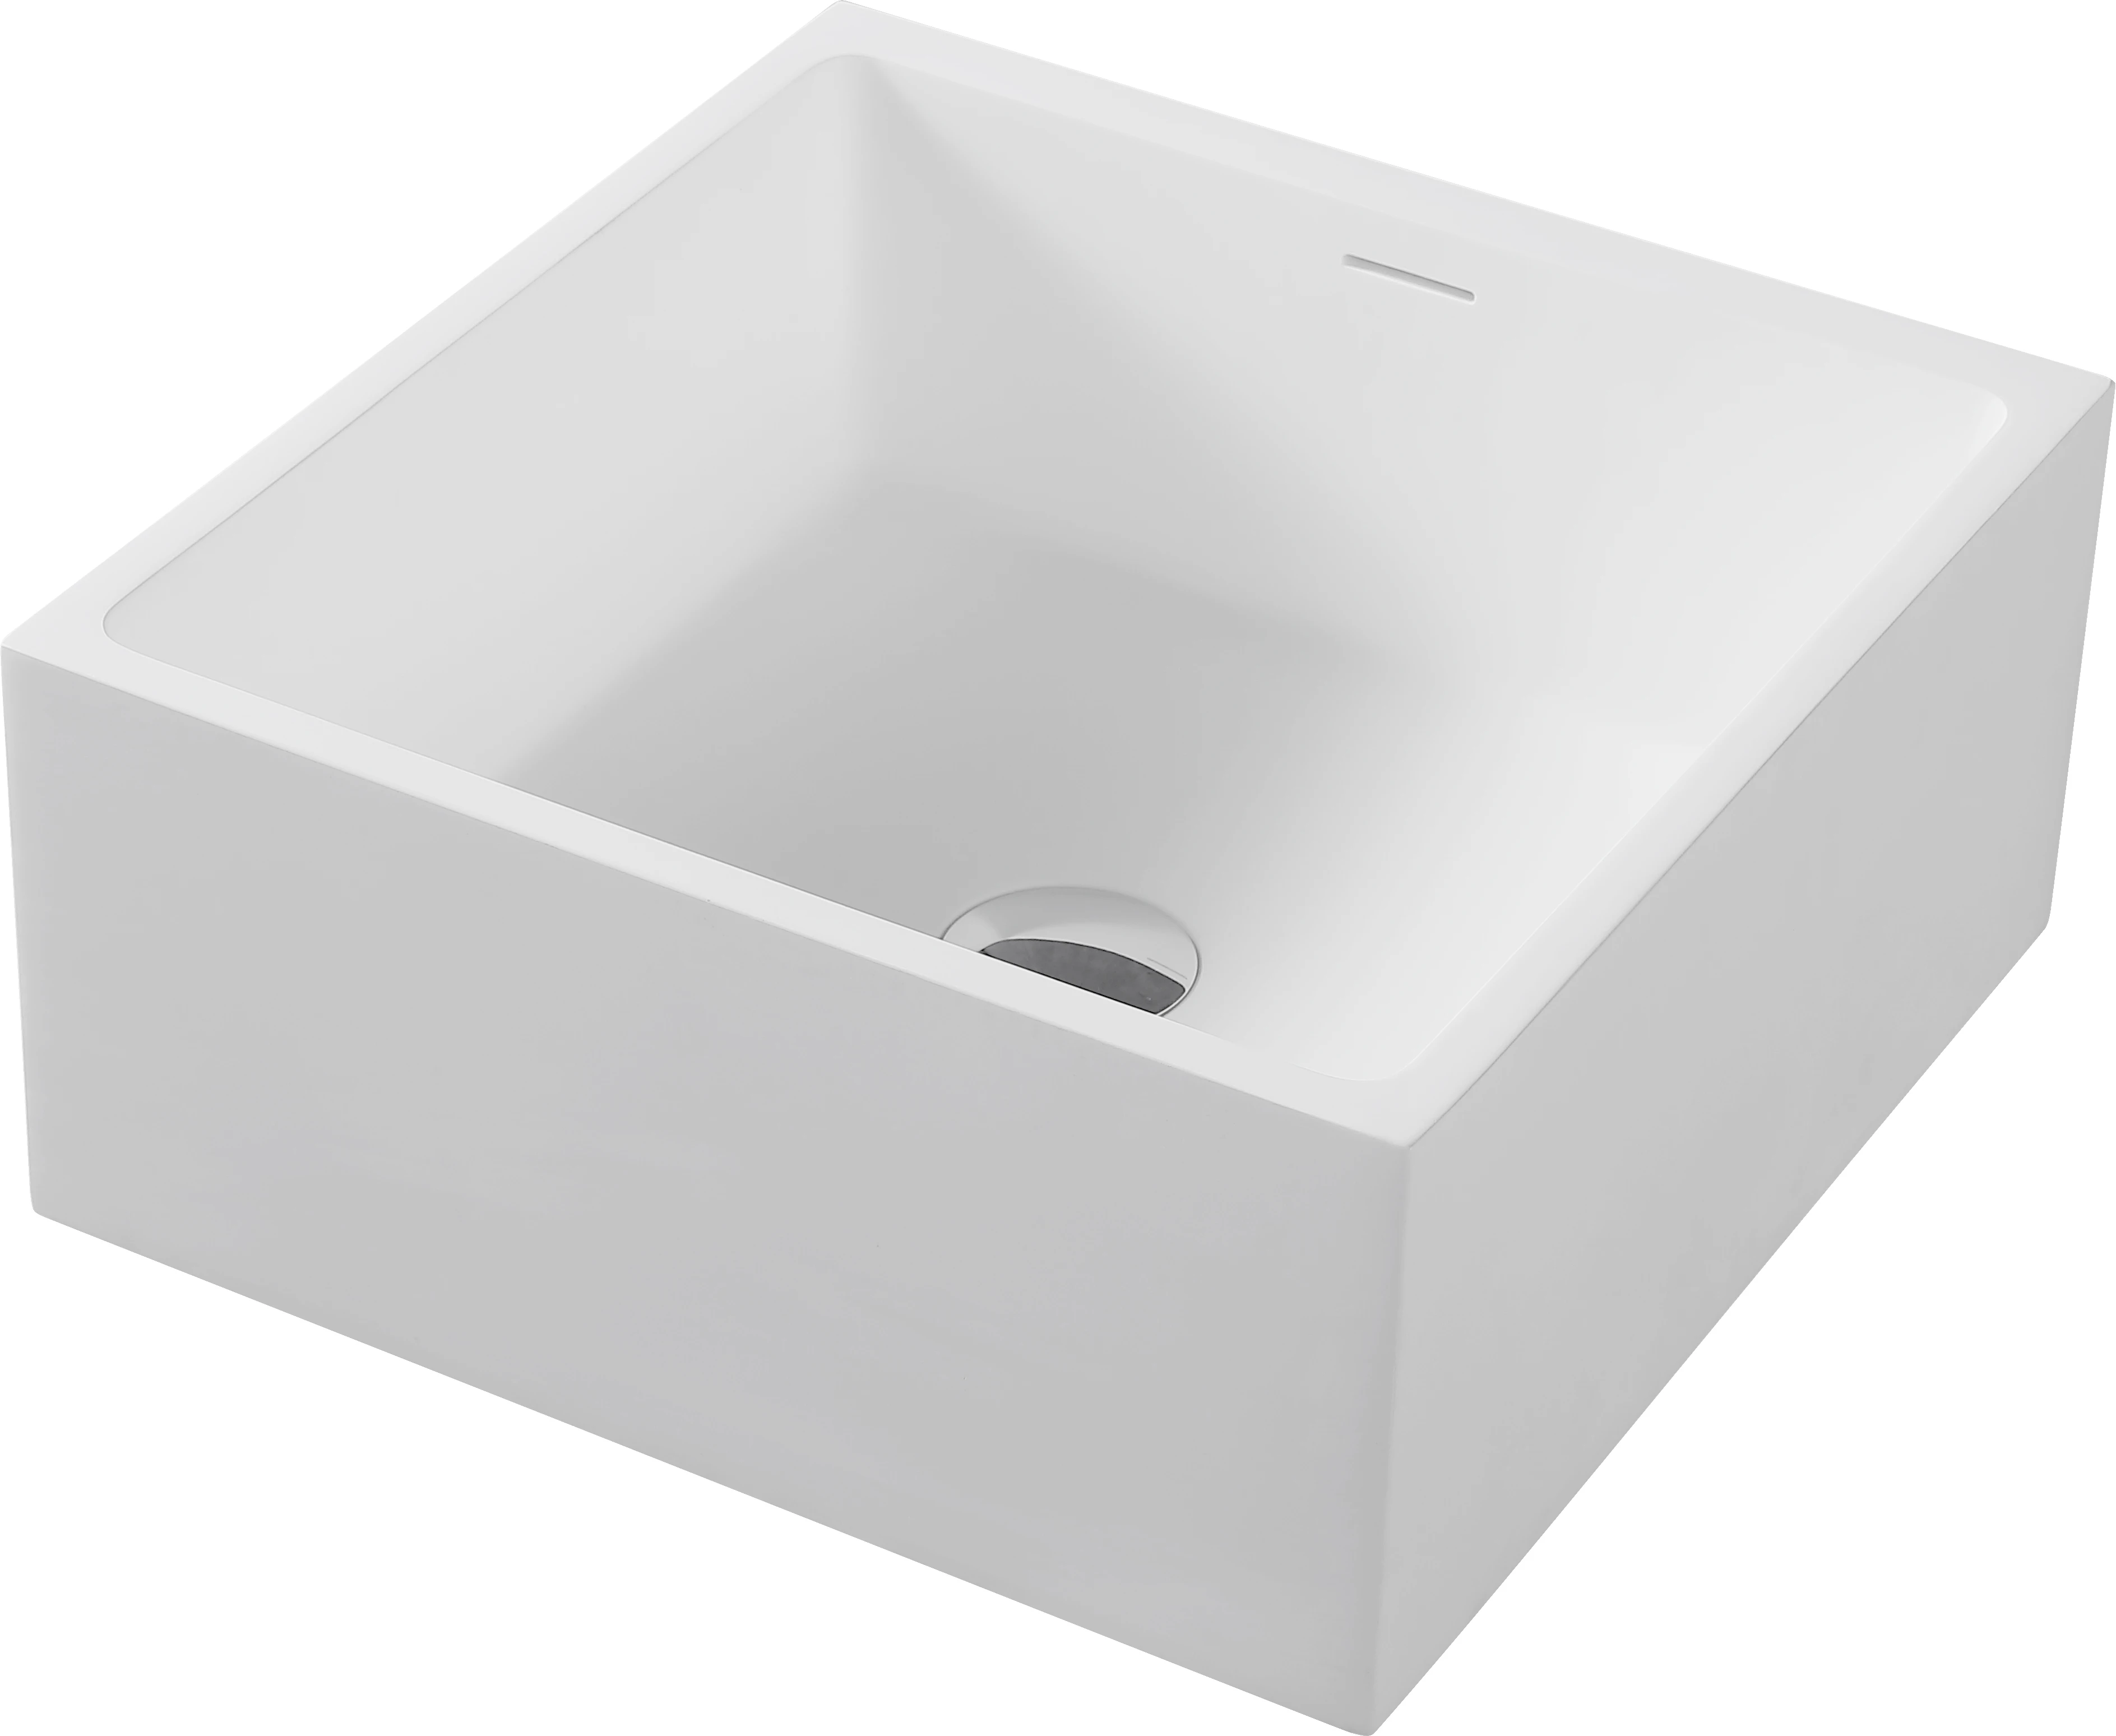 Square Acrylic solid surface pure white bathroom washbasins